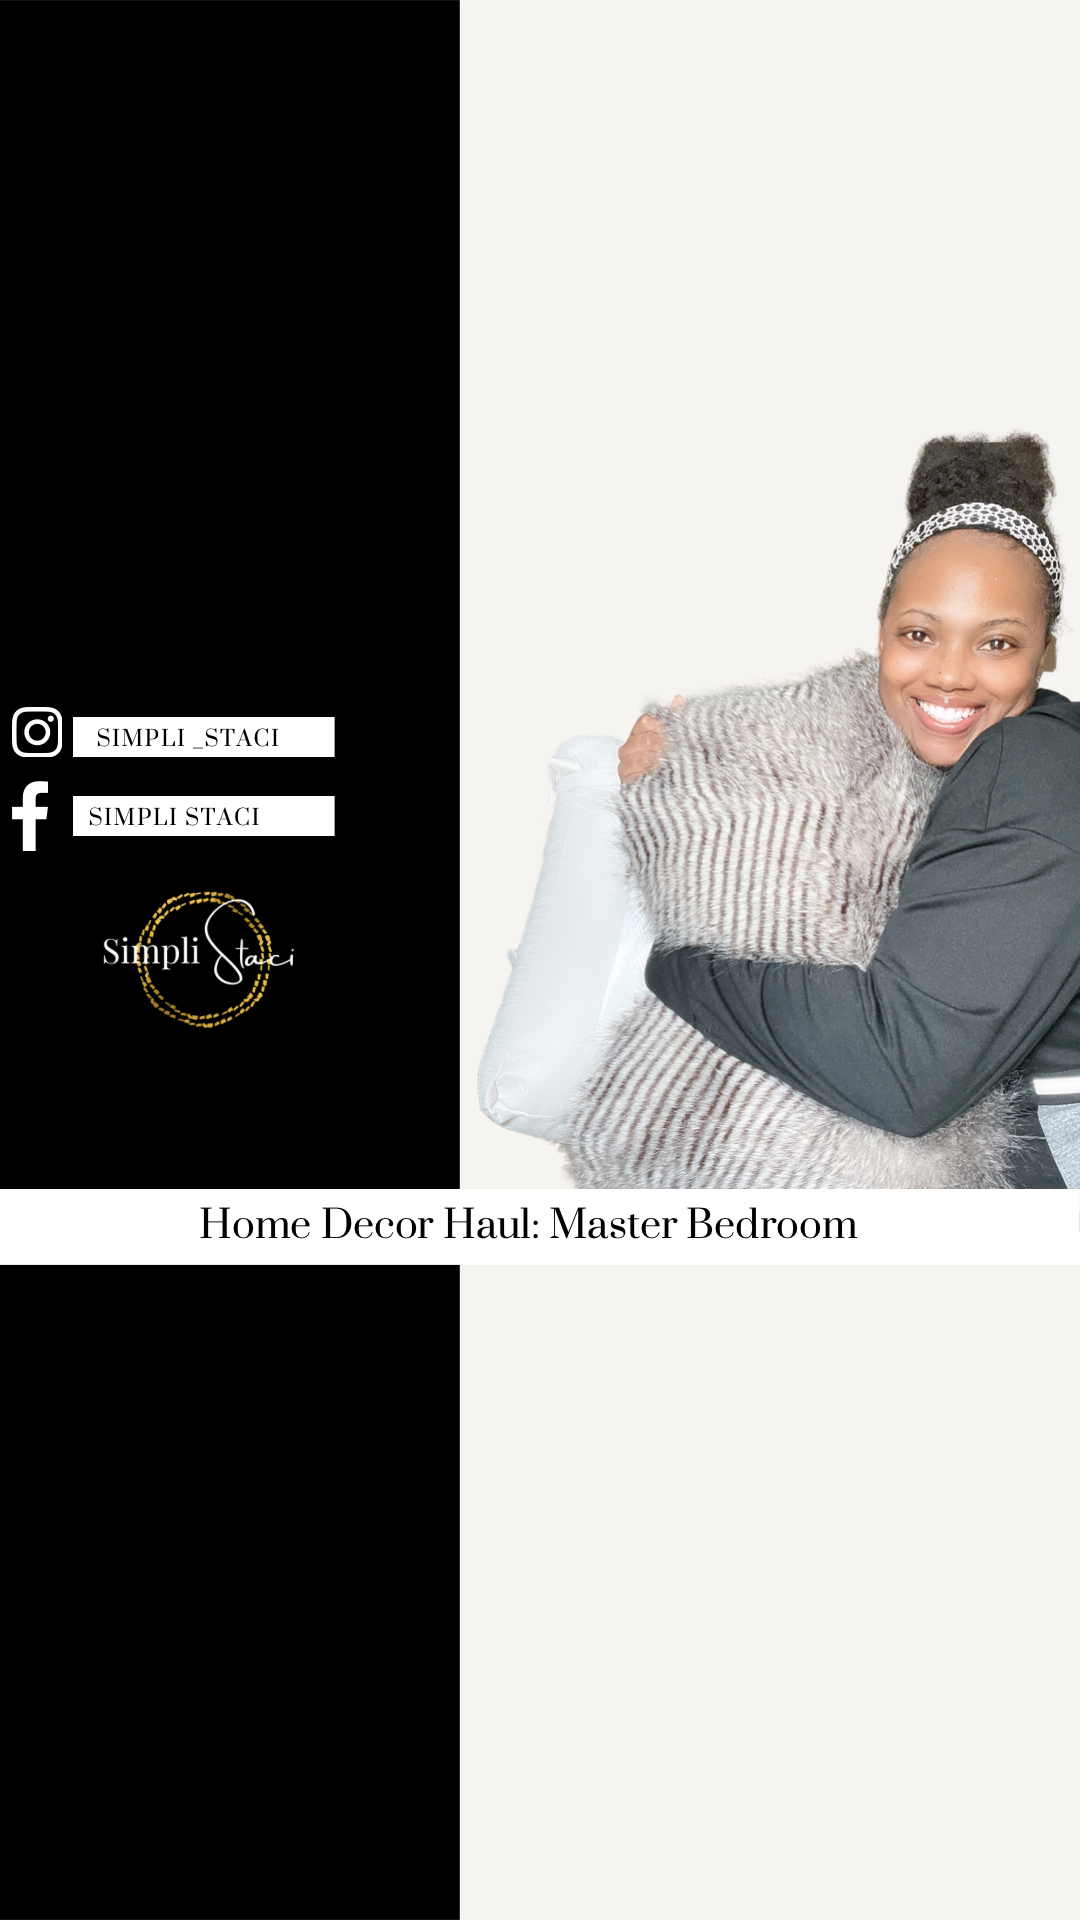 Master Bedroom Home Decor Haul